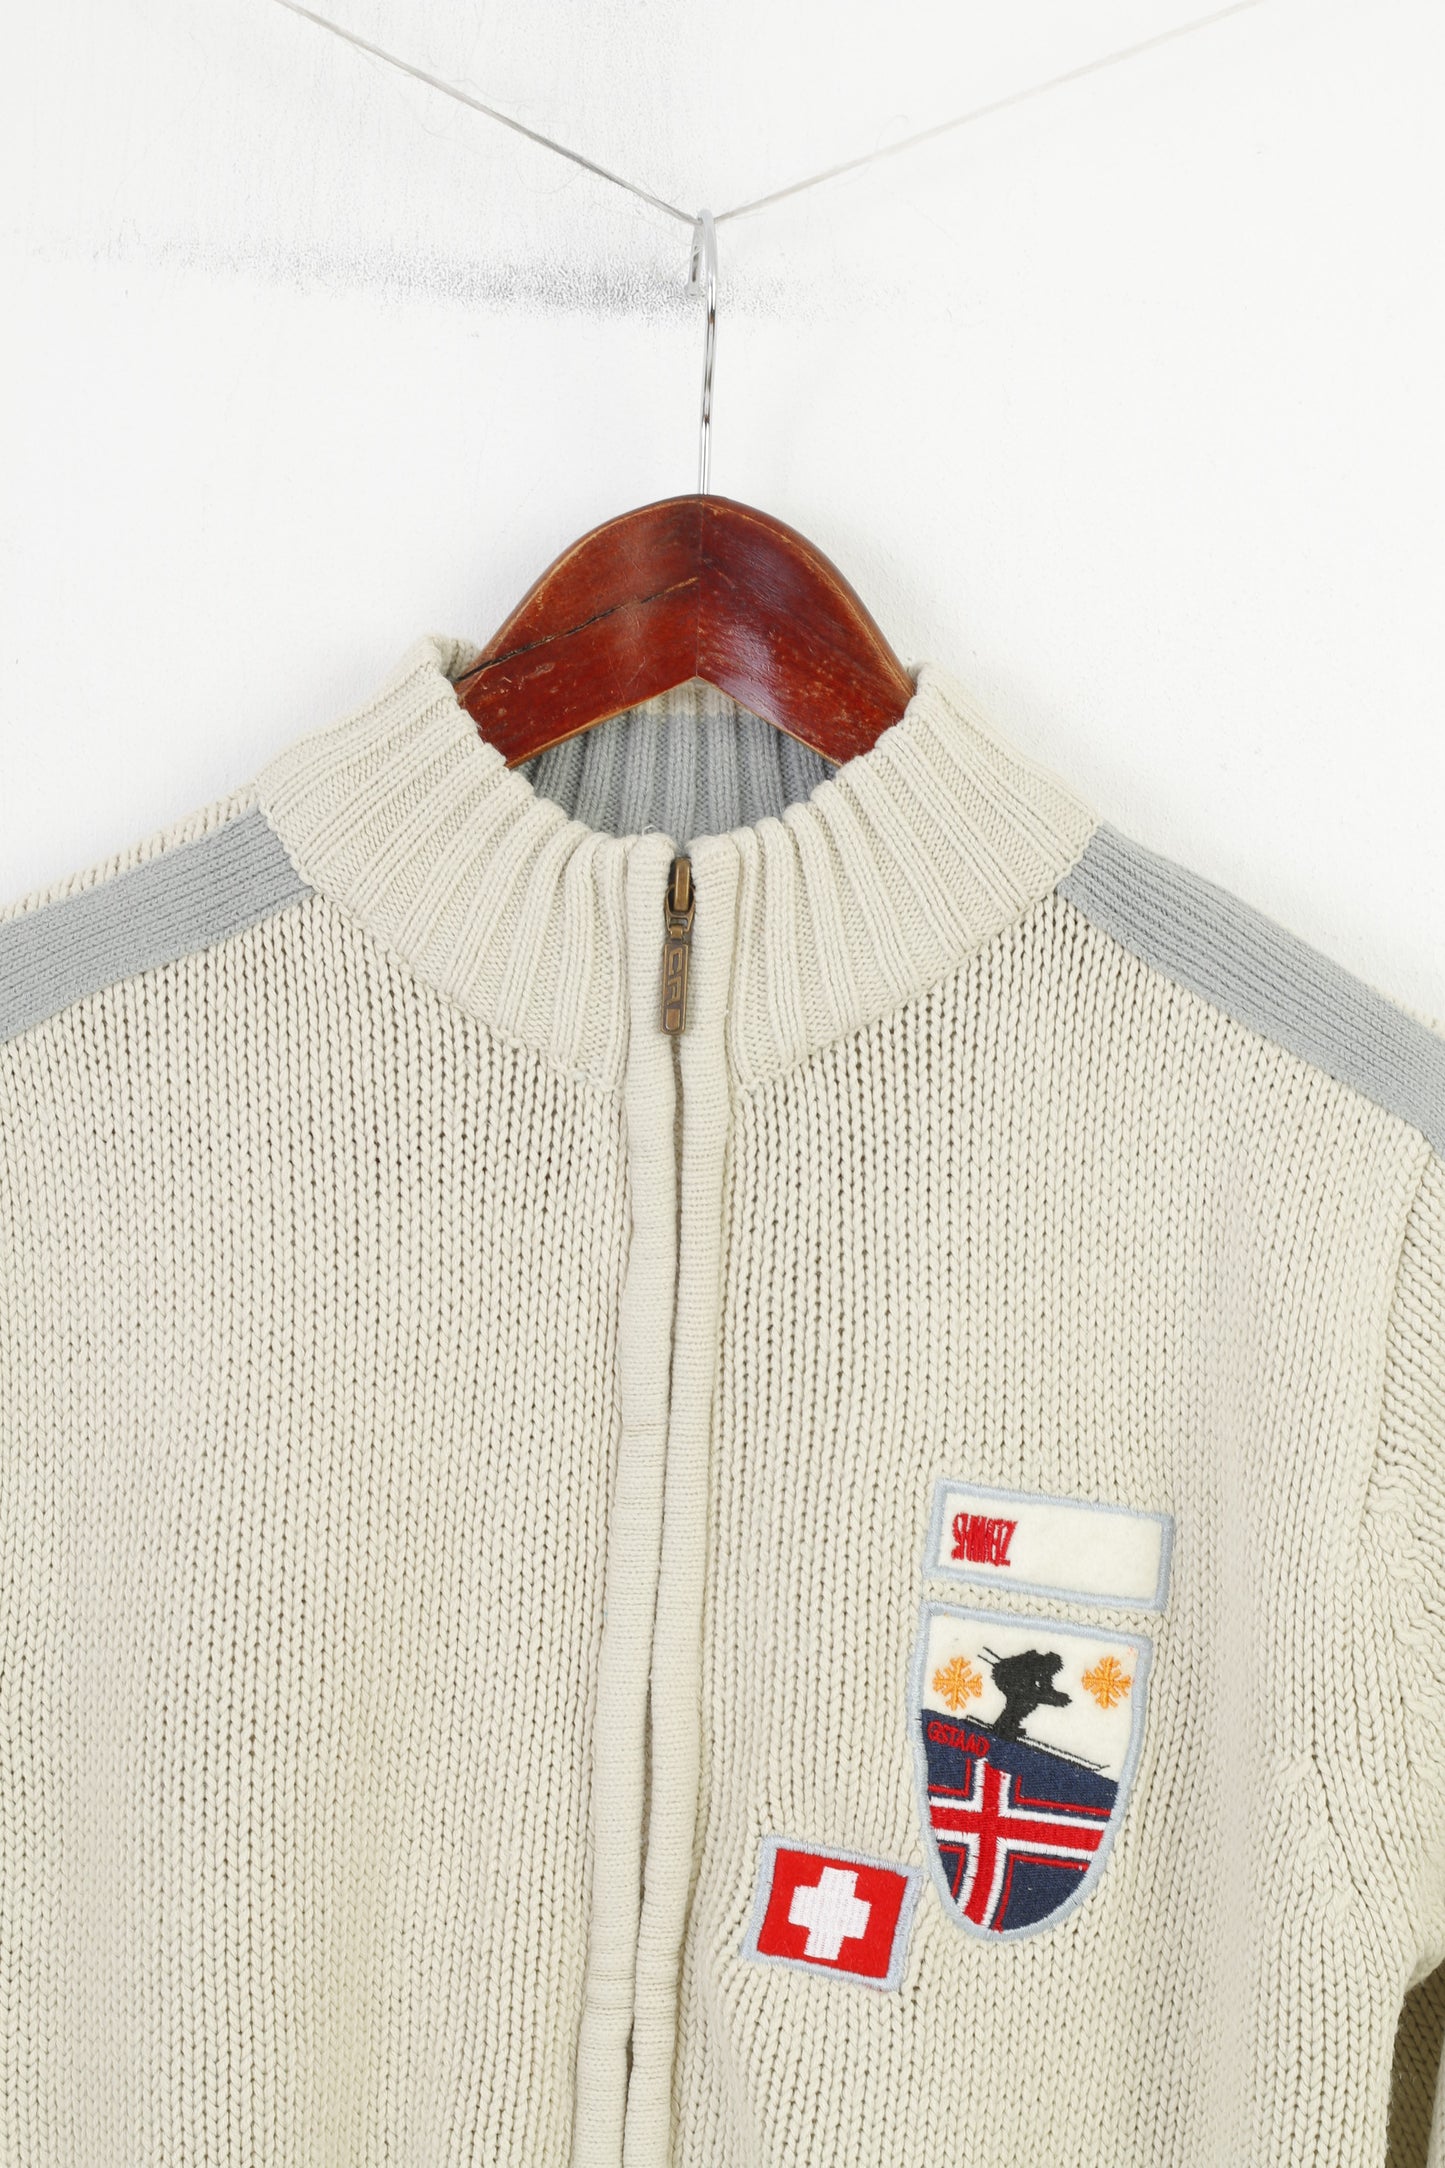 Hewlett Boys S 16 Age Jumper Full Zipper Beige Cotton Sweater Col d’hiver vintage Top 